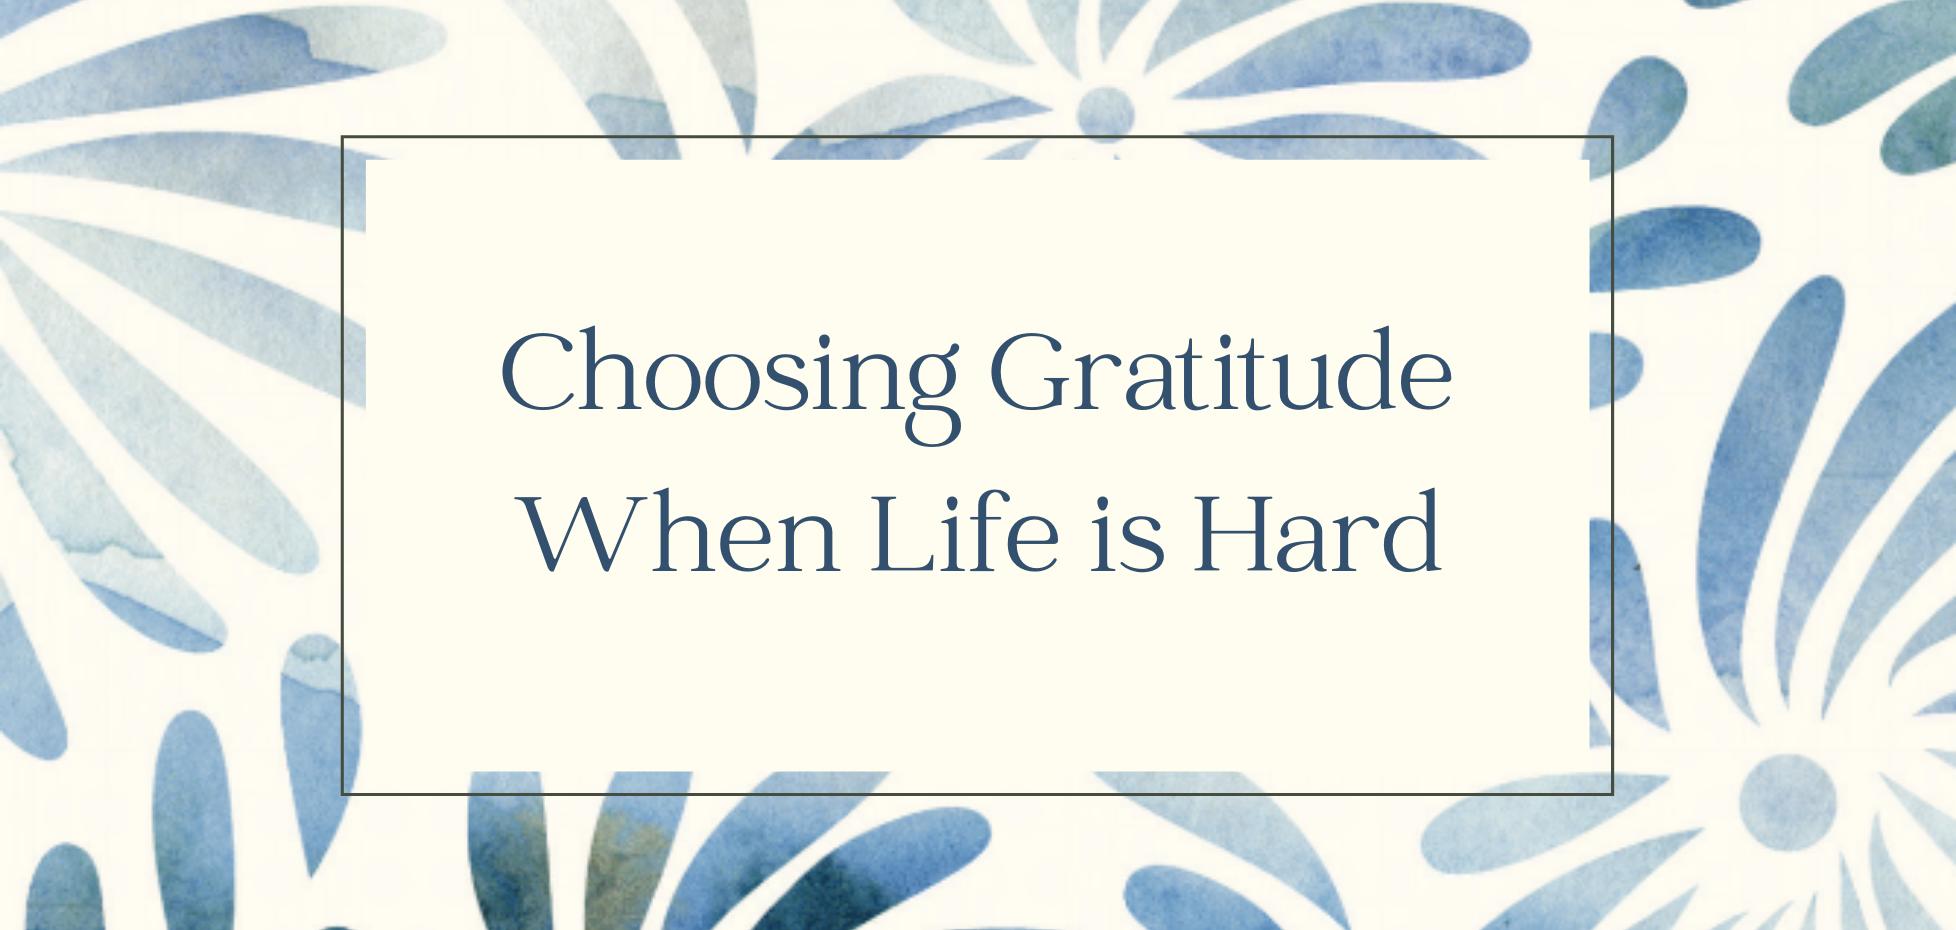 Choosing Gratitude When Life is Hard